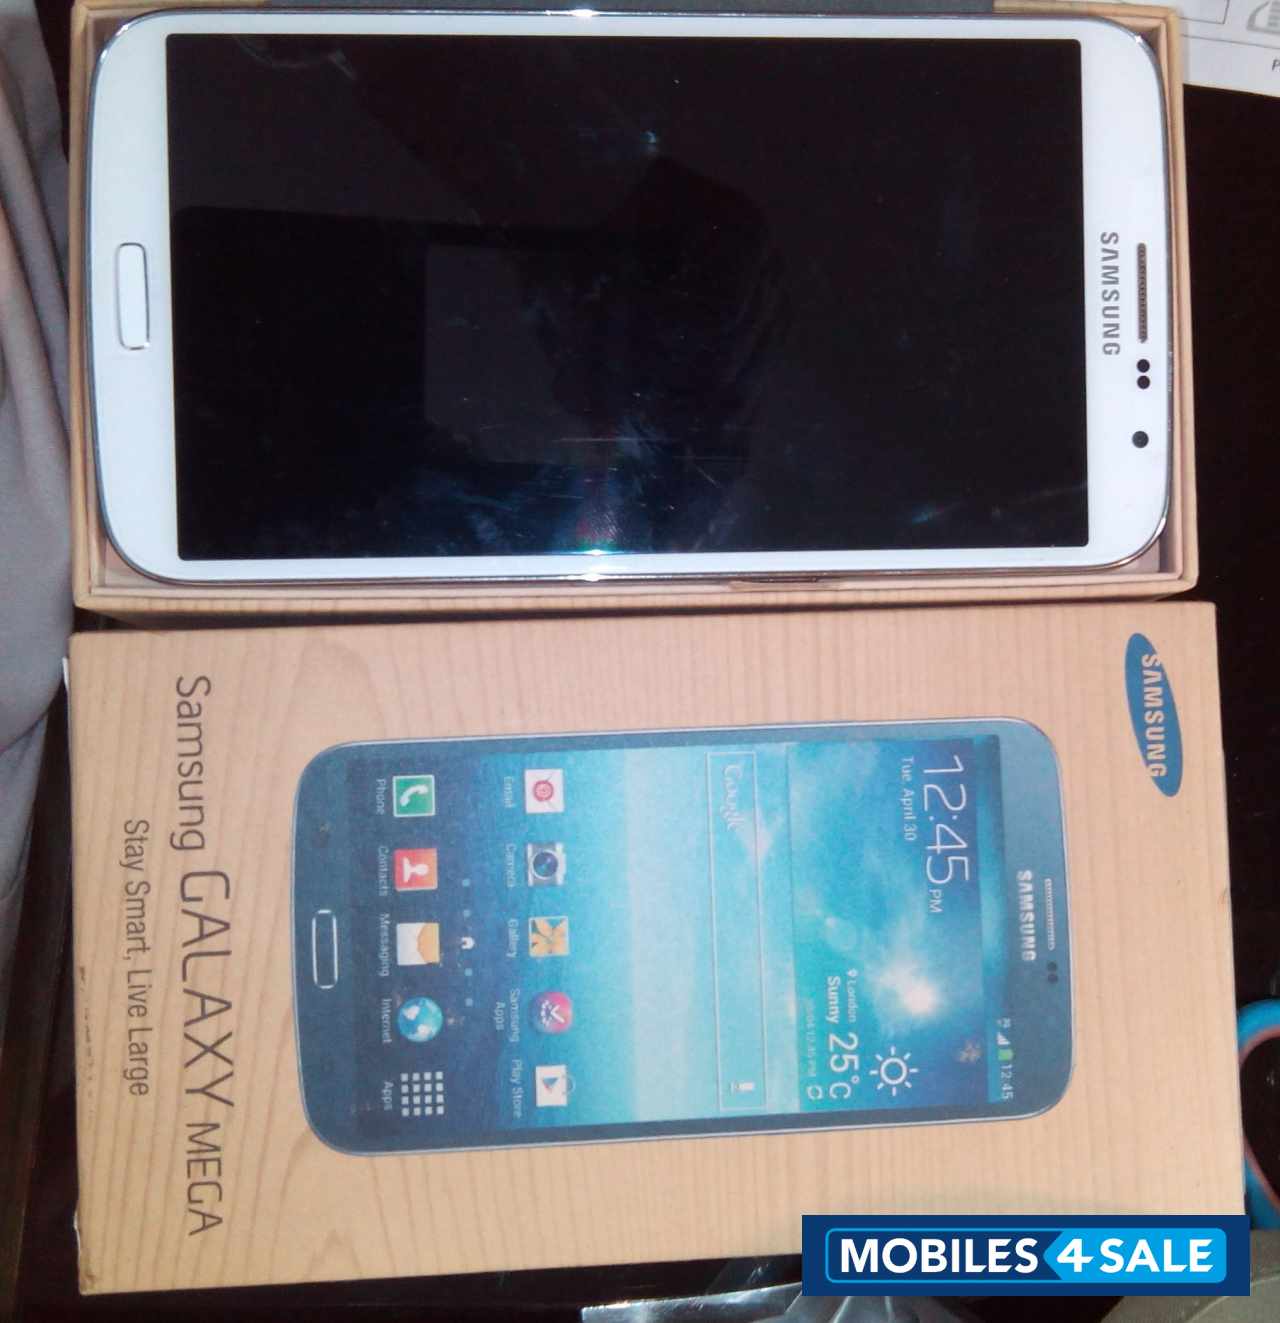 White Samsung Galaxy Mega 6.3 I9200